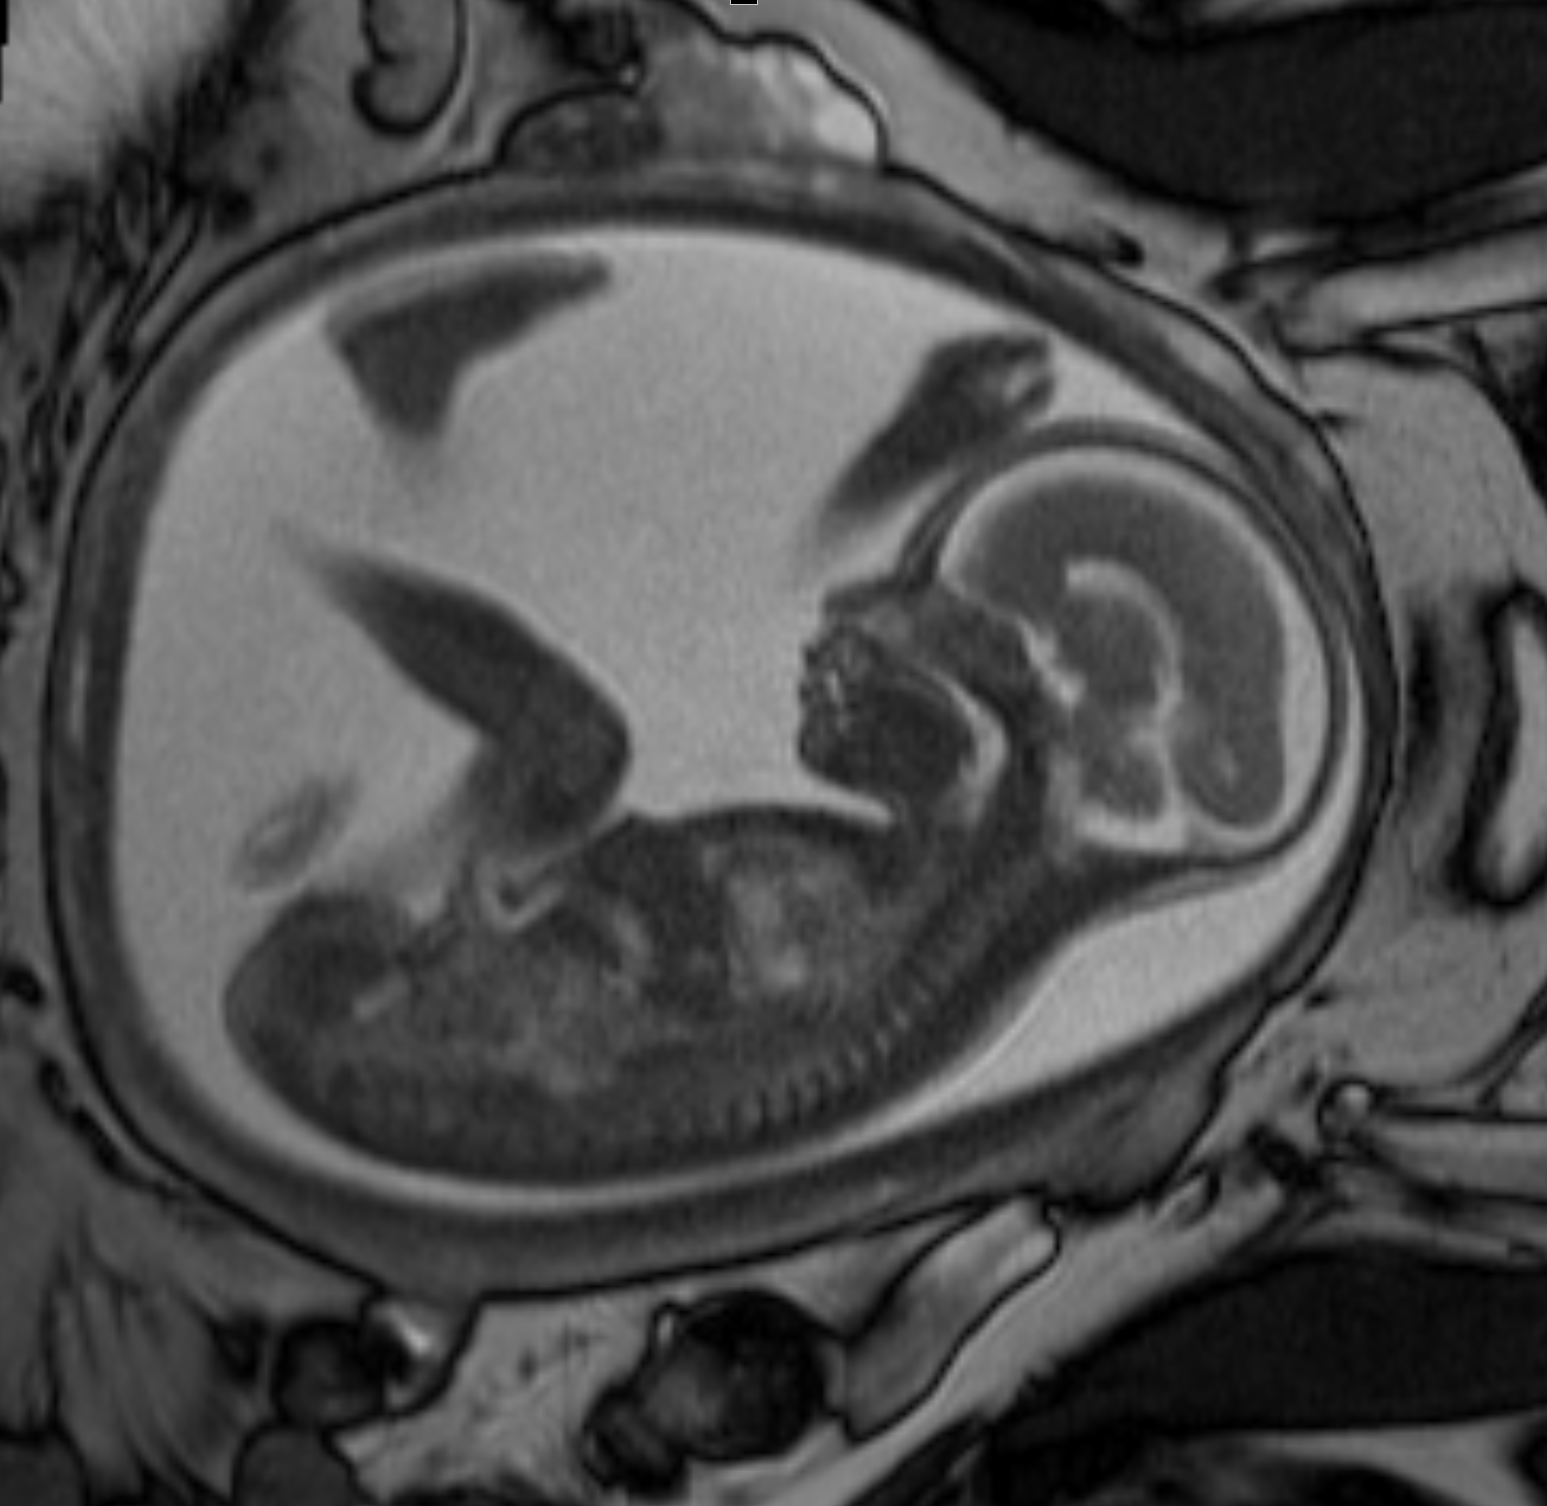 A fetal MRI showing normal development.